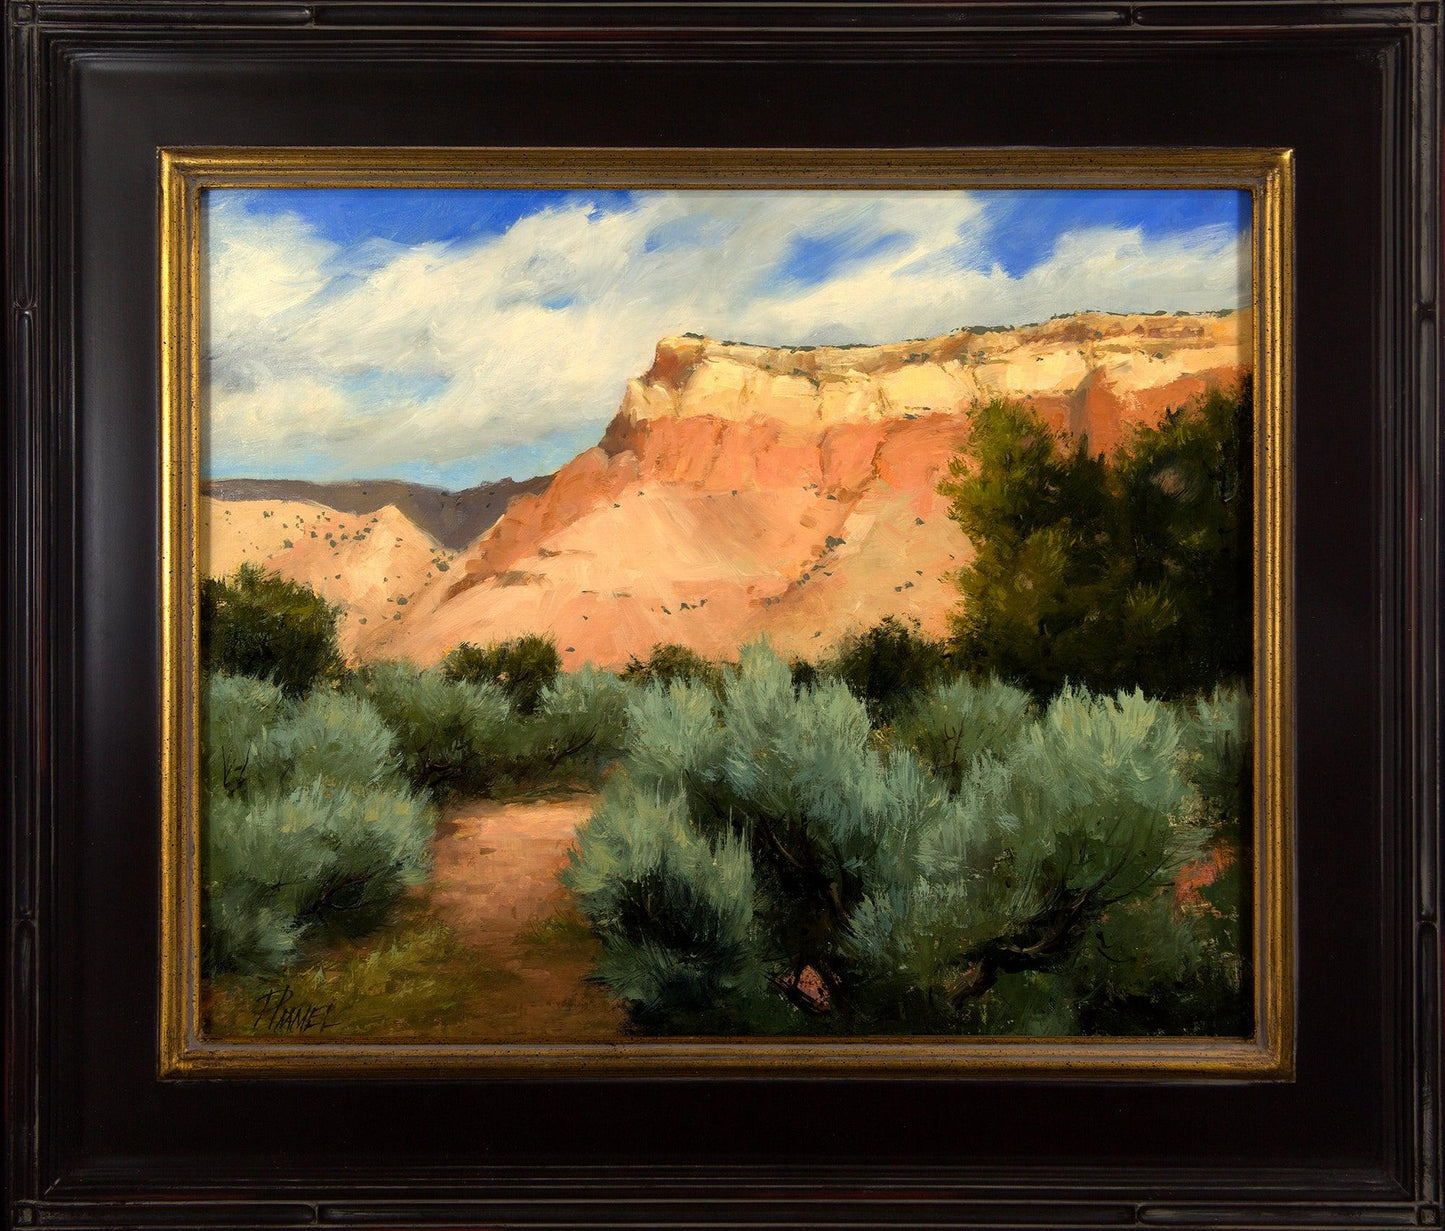 Ghost Ranch Memories-Painting-Peggy Immel-Sorrel Sky Gallery